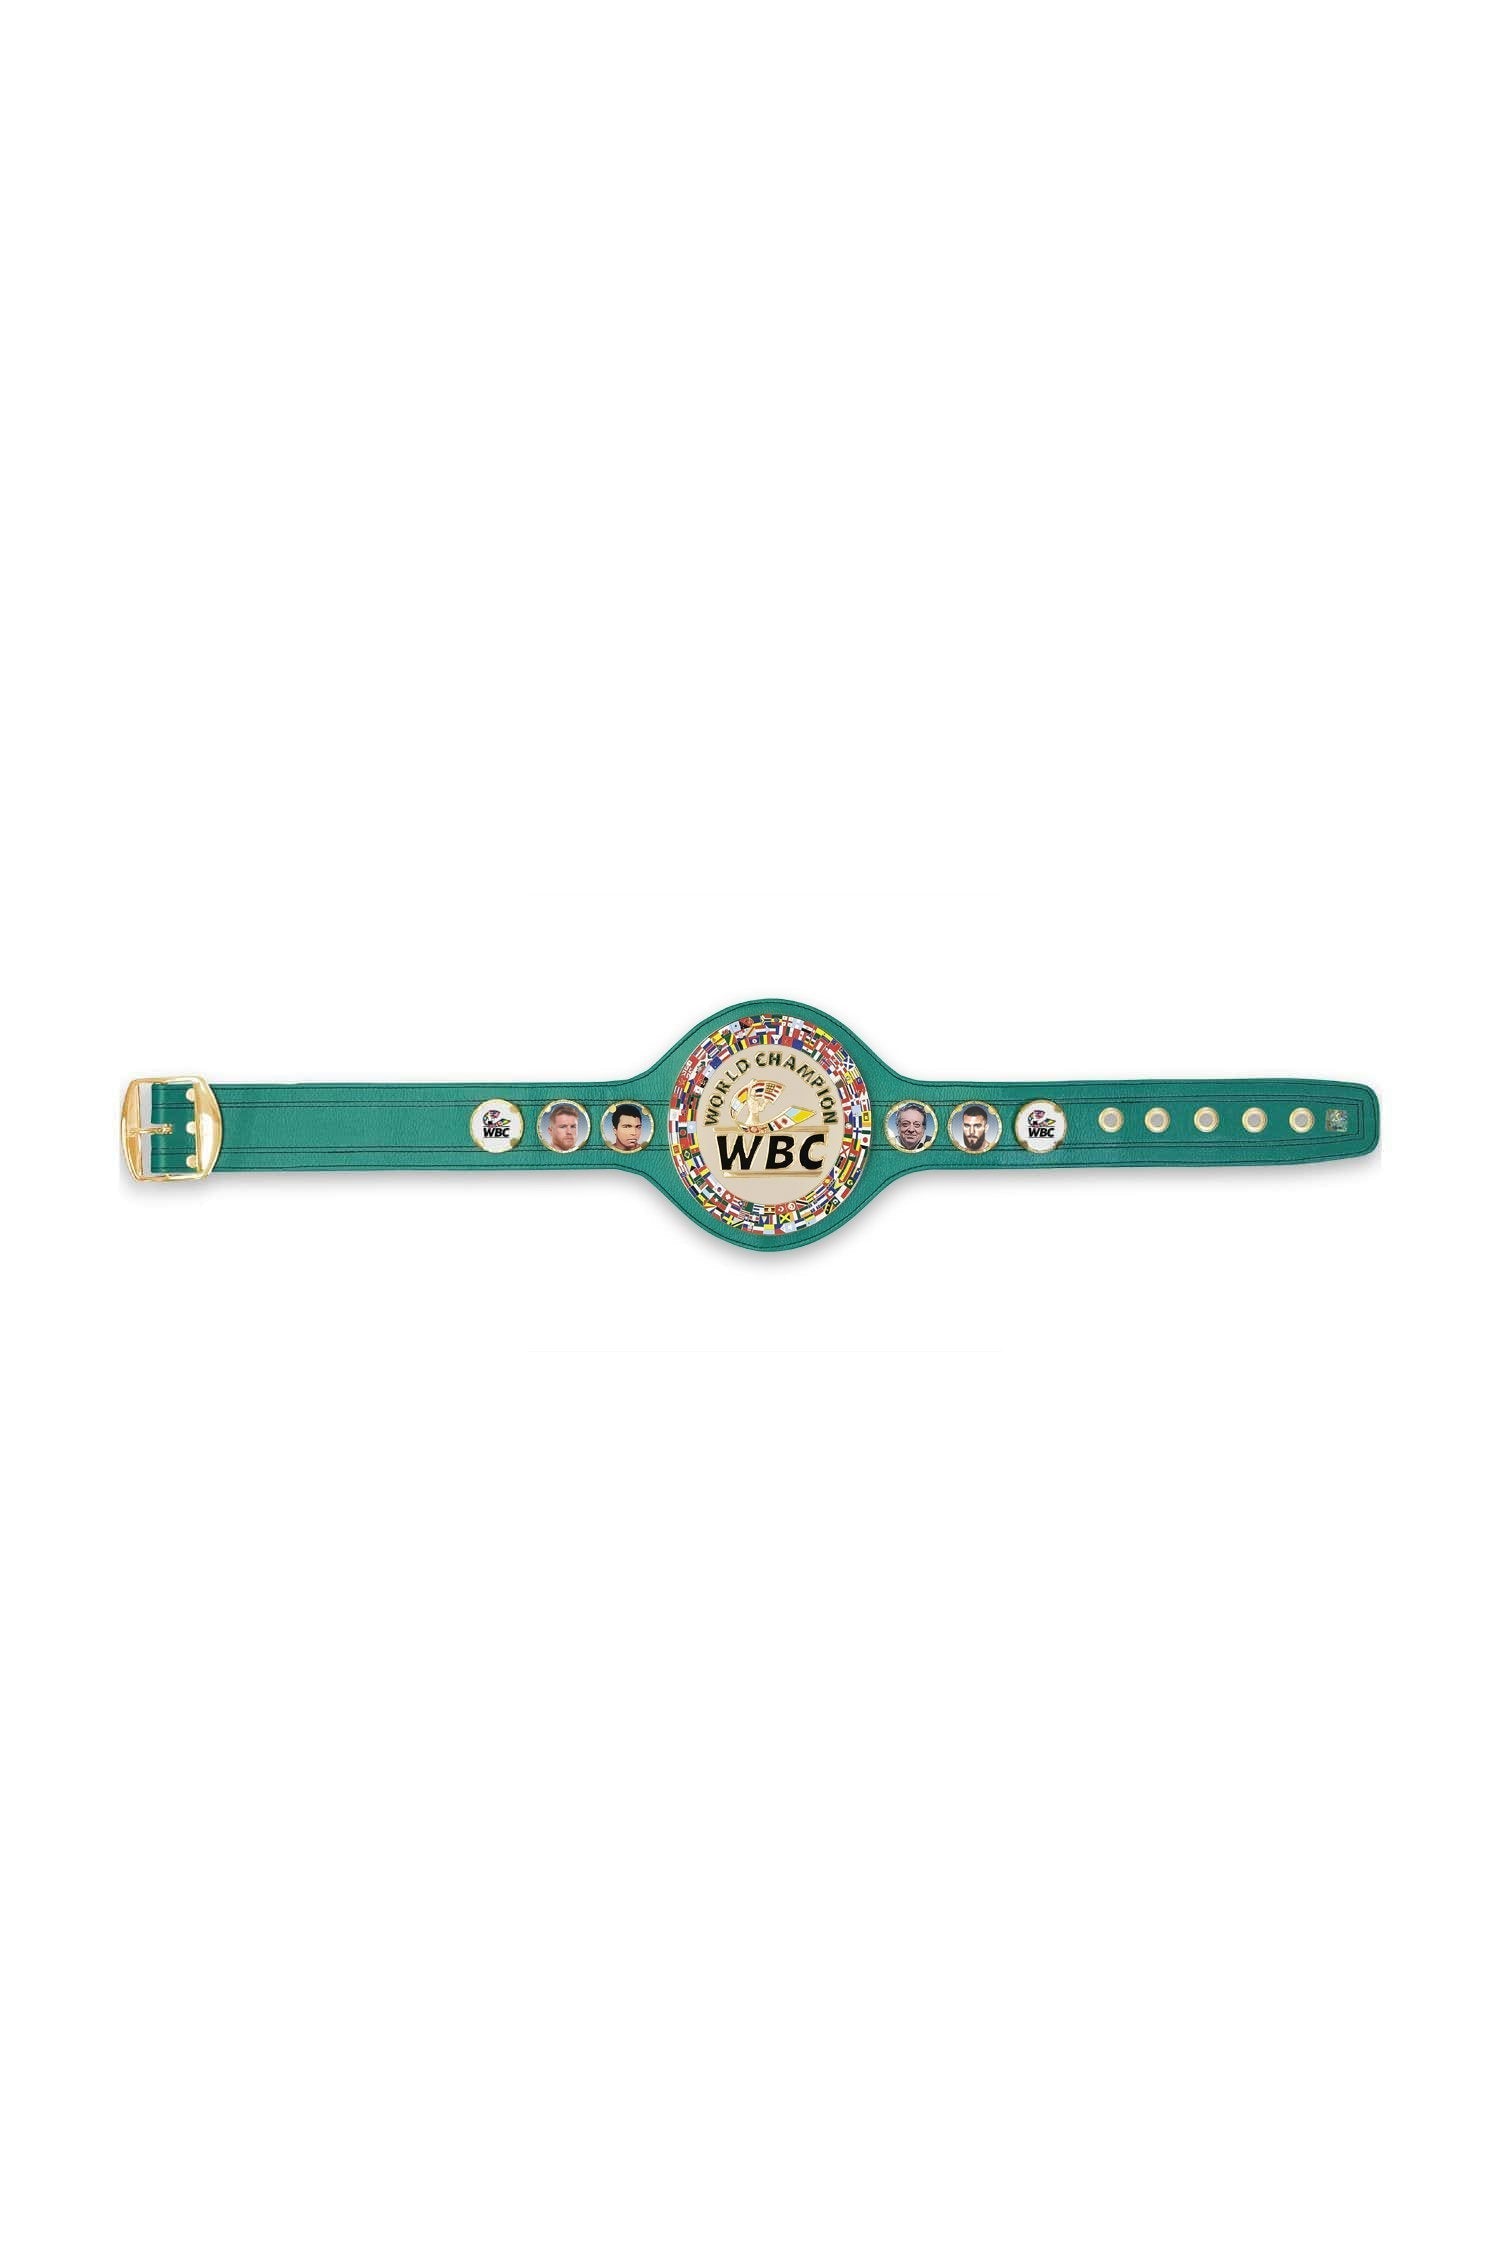 WBC Store Replica Belts WBC Championship Belt  "Historic Fights" Saúl “Canelo” Álvarez vs. Caleb Plant